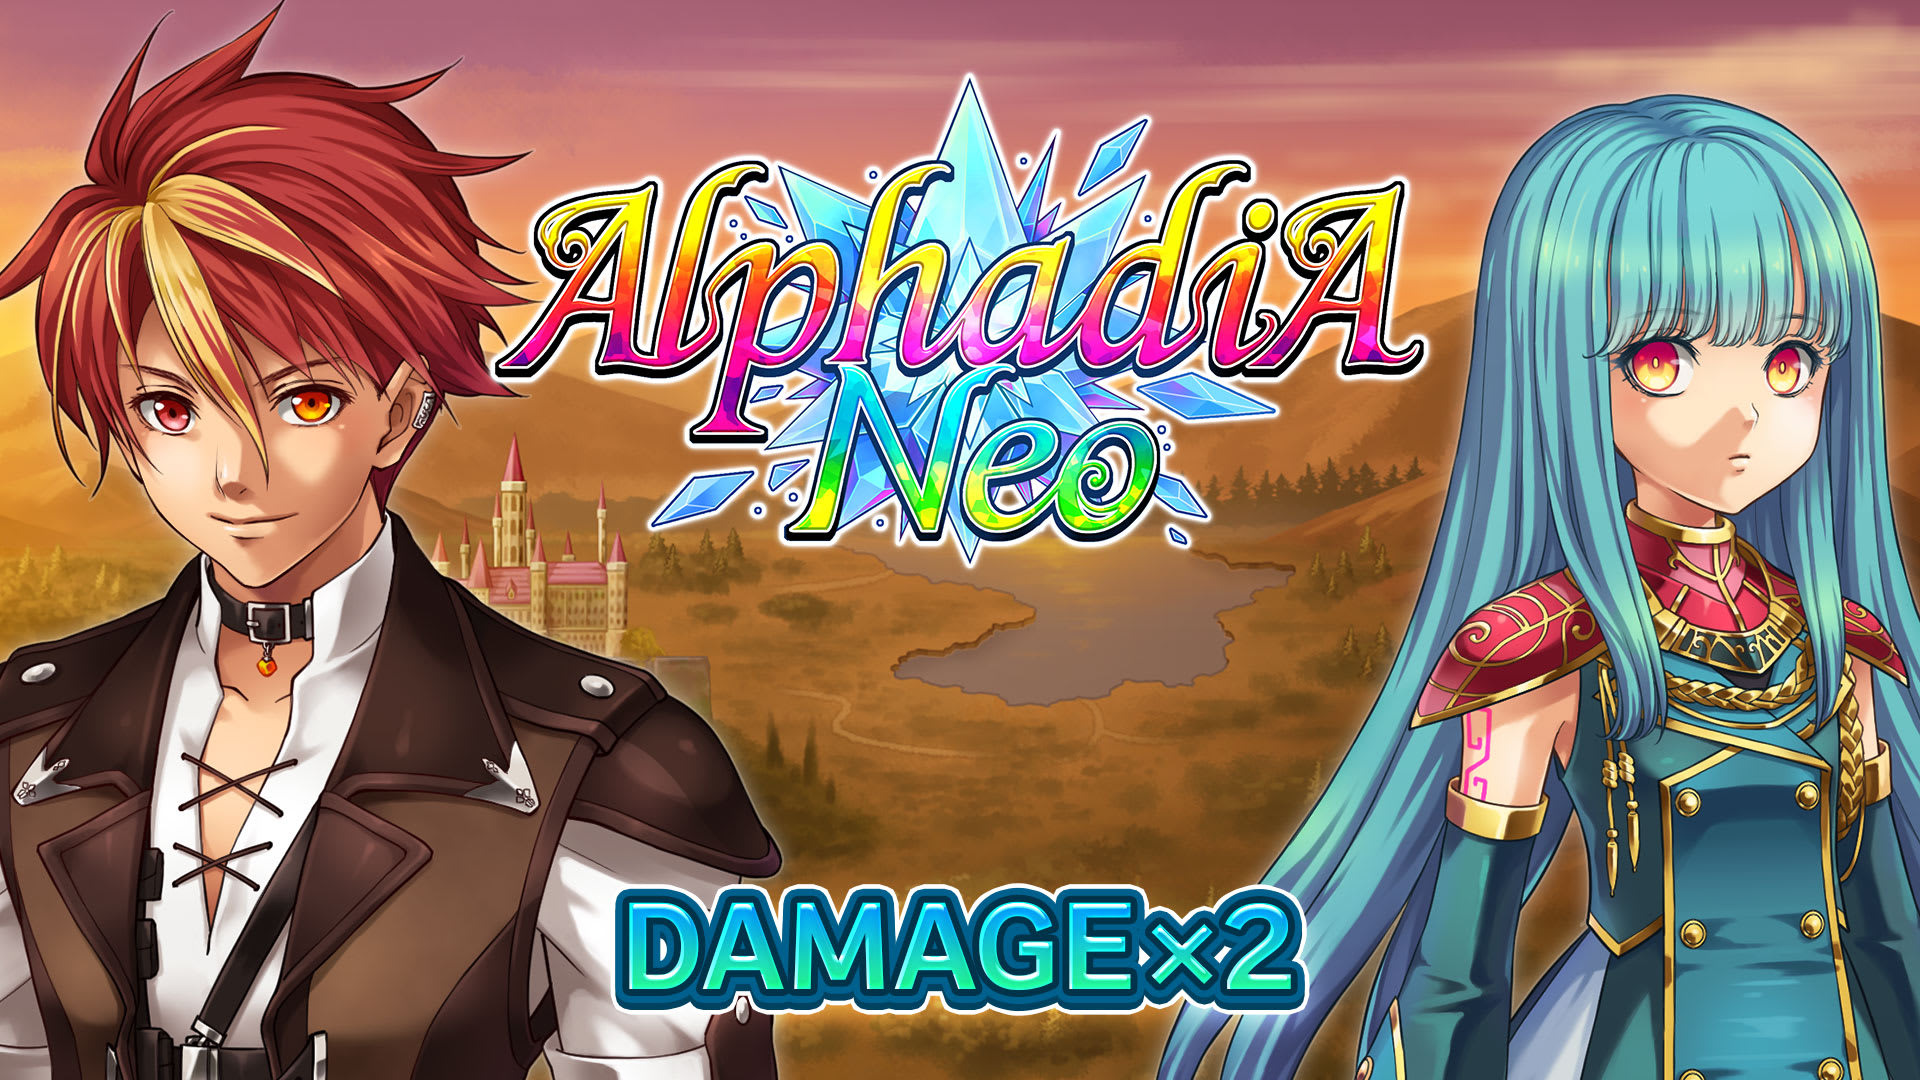 Damage x2 - Alphadia Neo